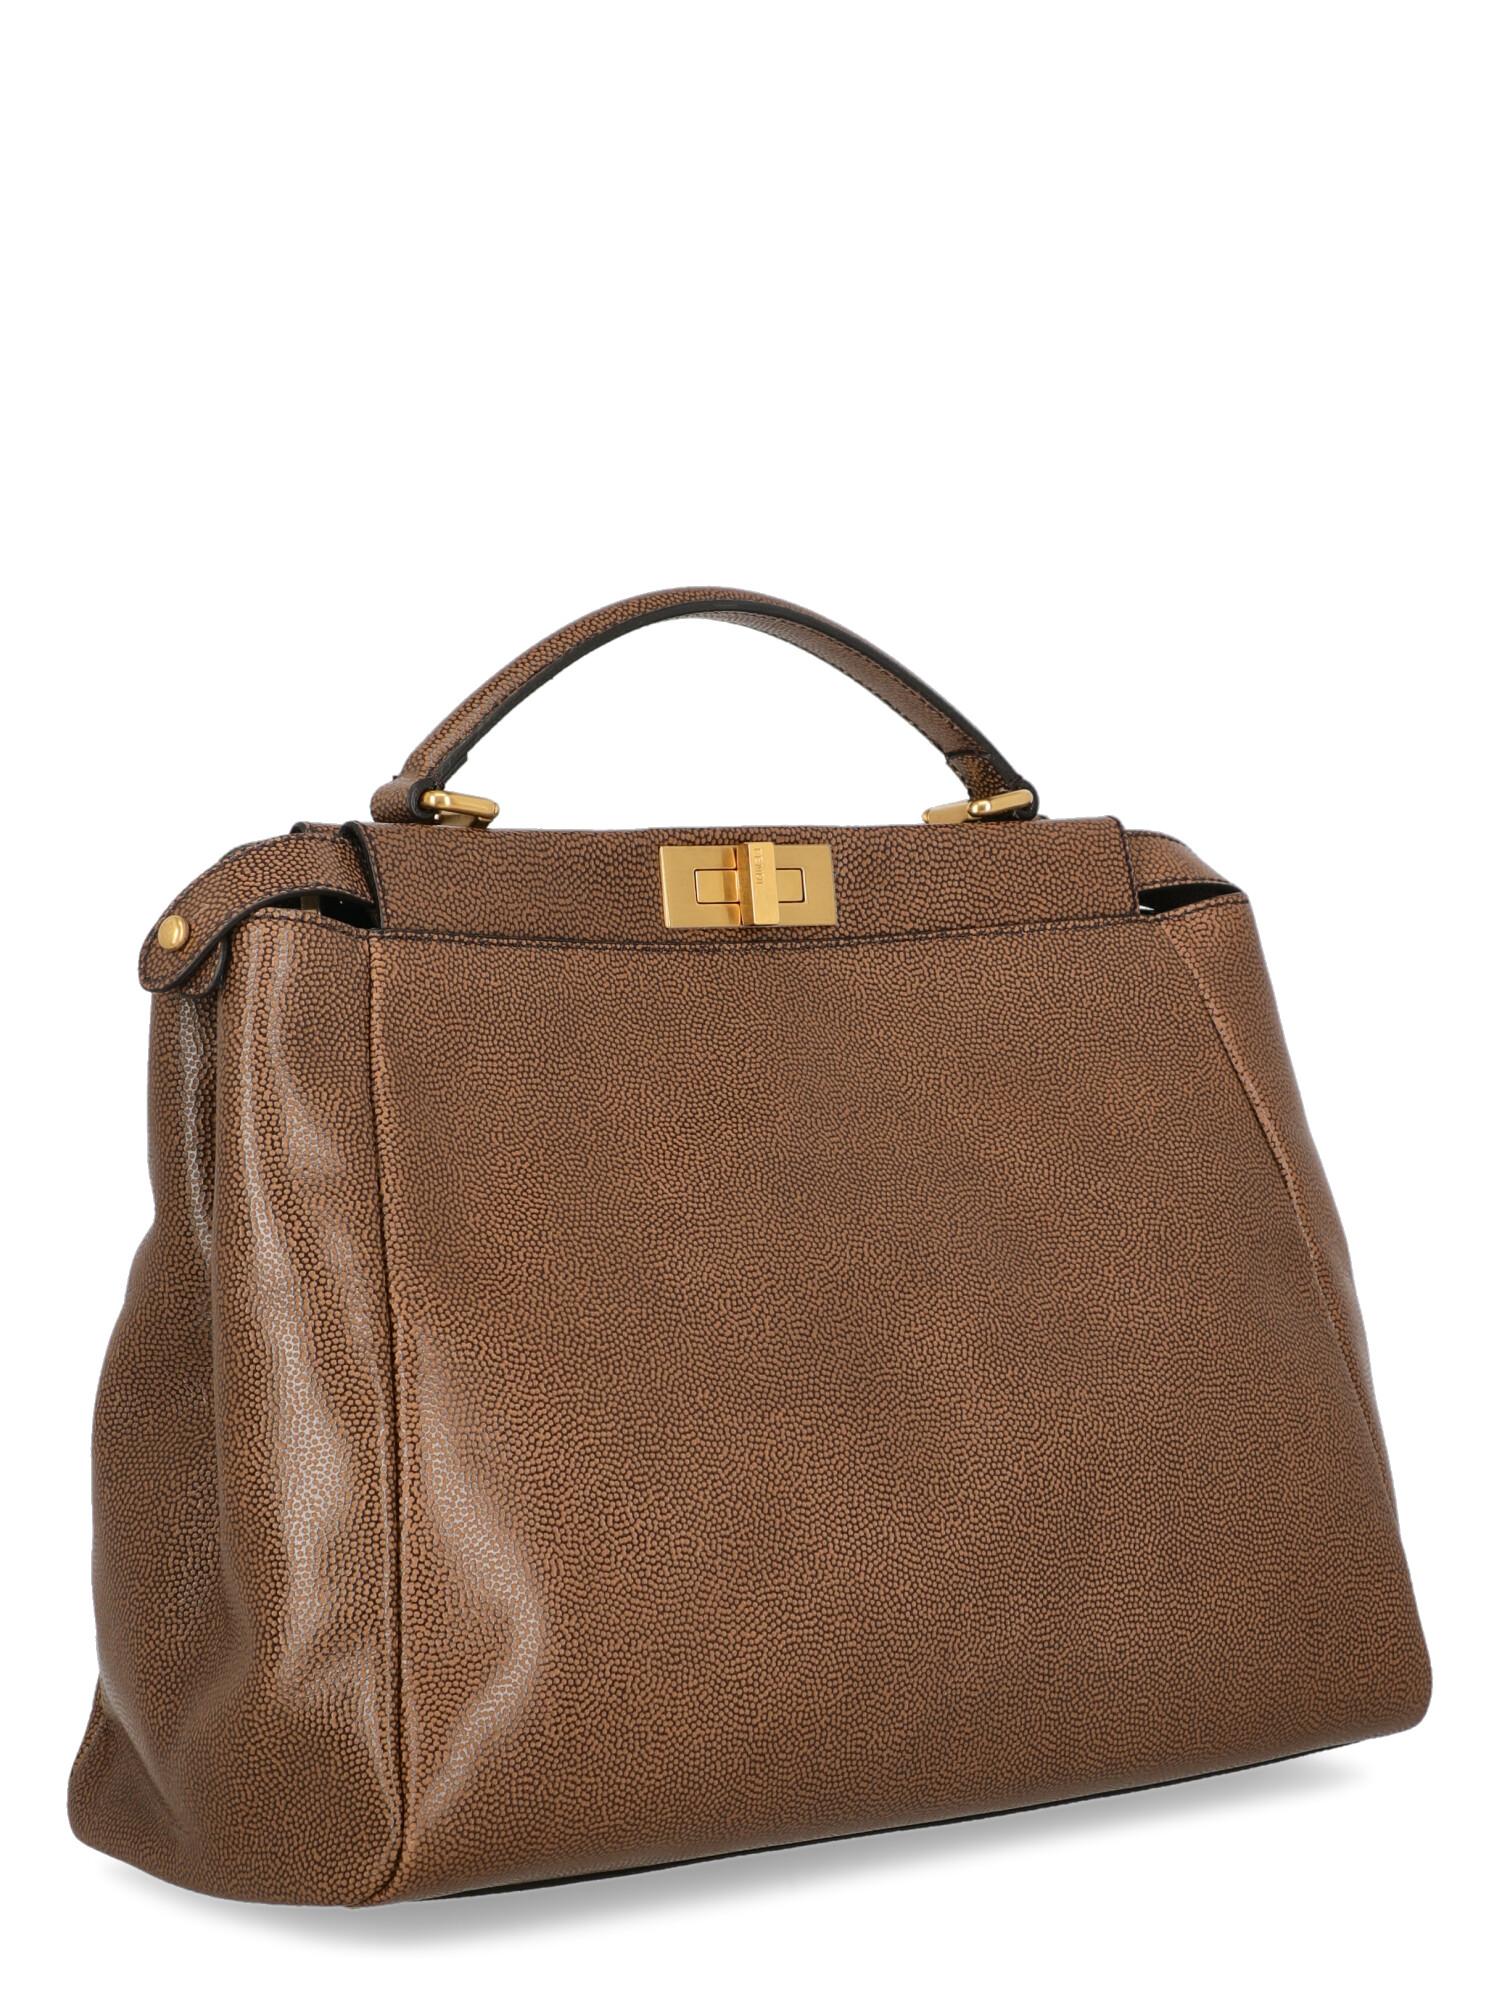 Fendi Women  Handbags  Peekaboo Brown Leather In Excellent Condition For Sale In Milan, IT